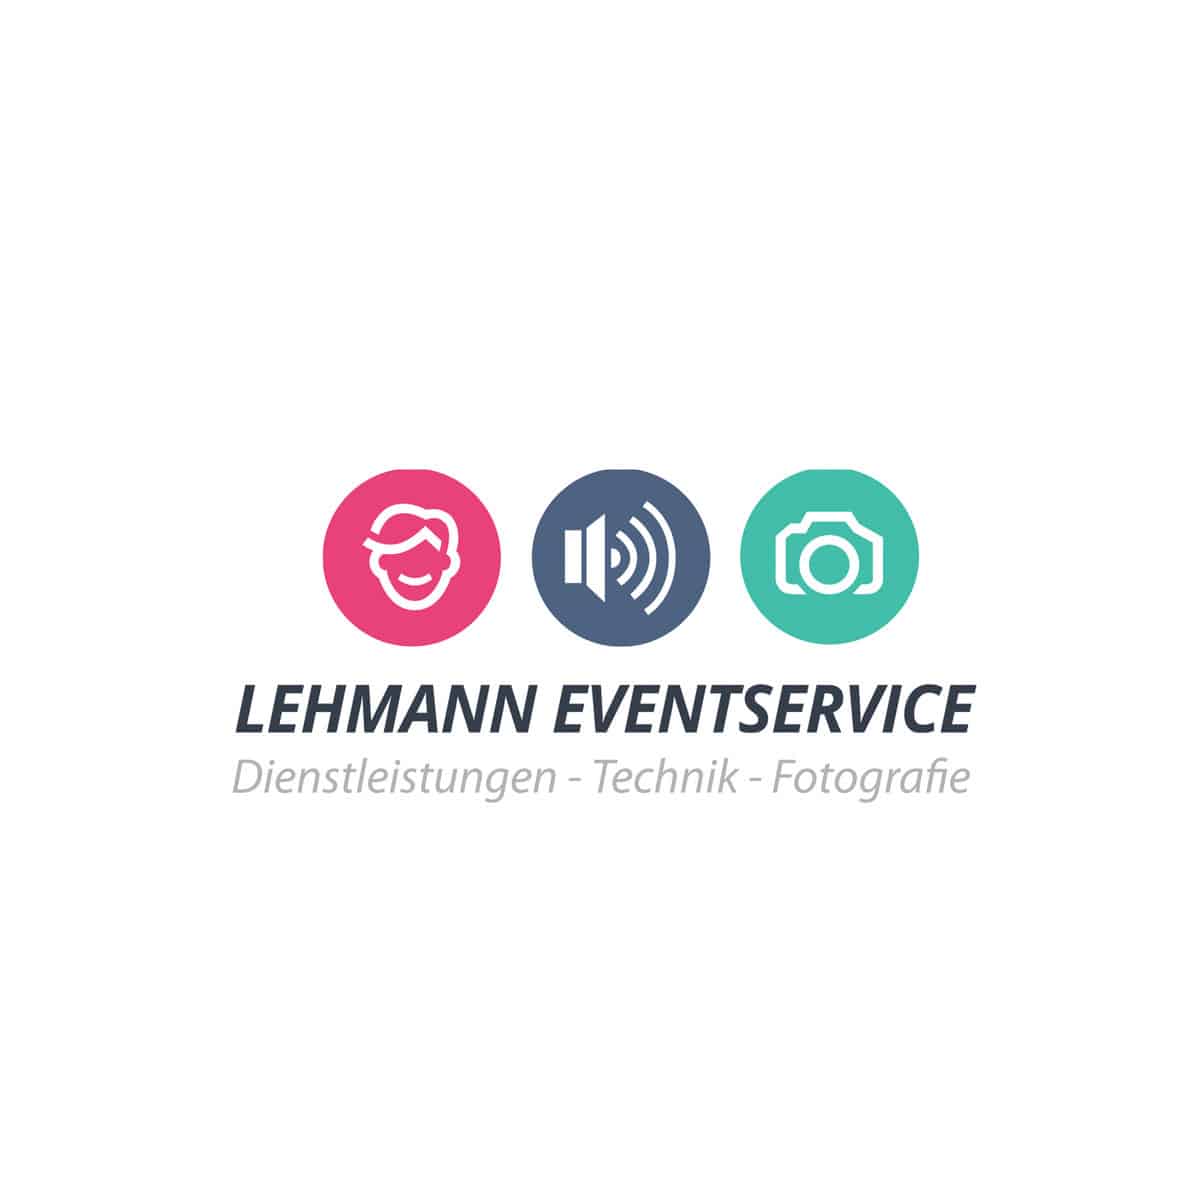 Lehmann Eventservice